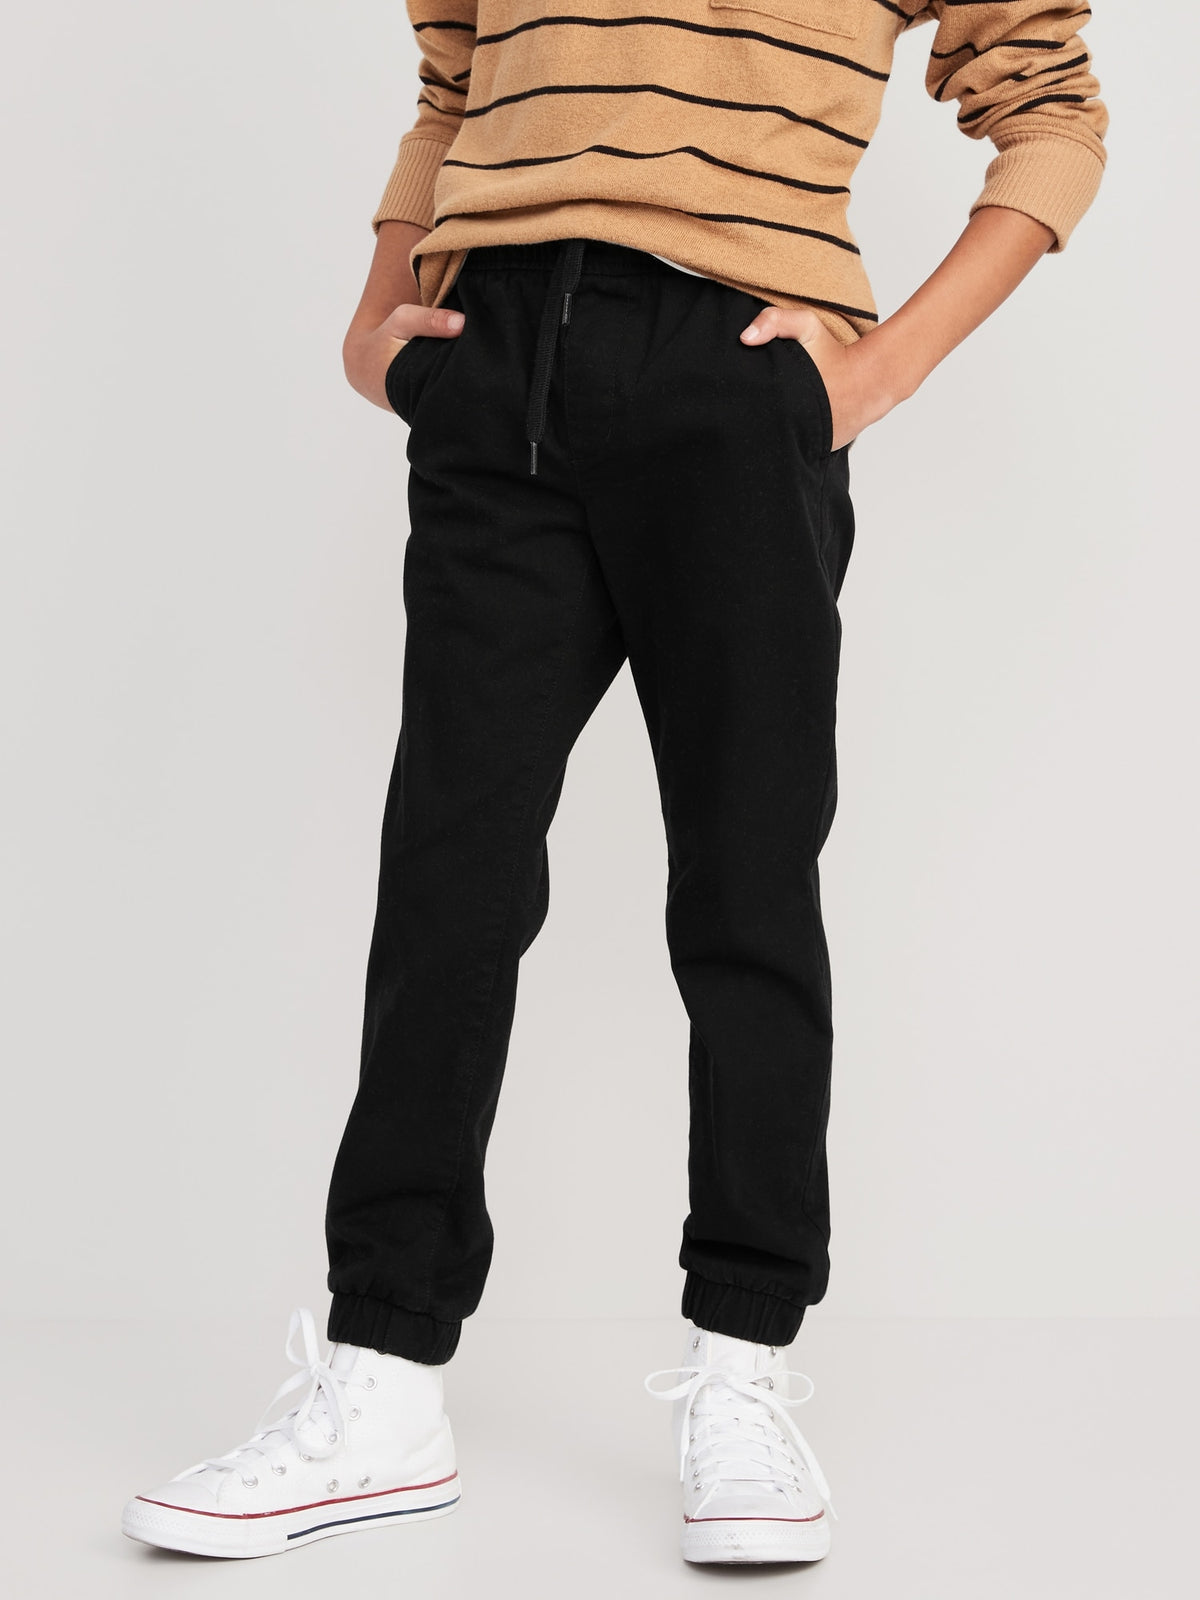 SEONEG Six Pocket Pants for Boys Boys Stylish Jogger PantsBoys Jogger  Jeans  Comfortable